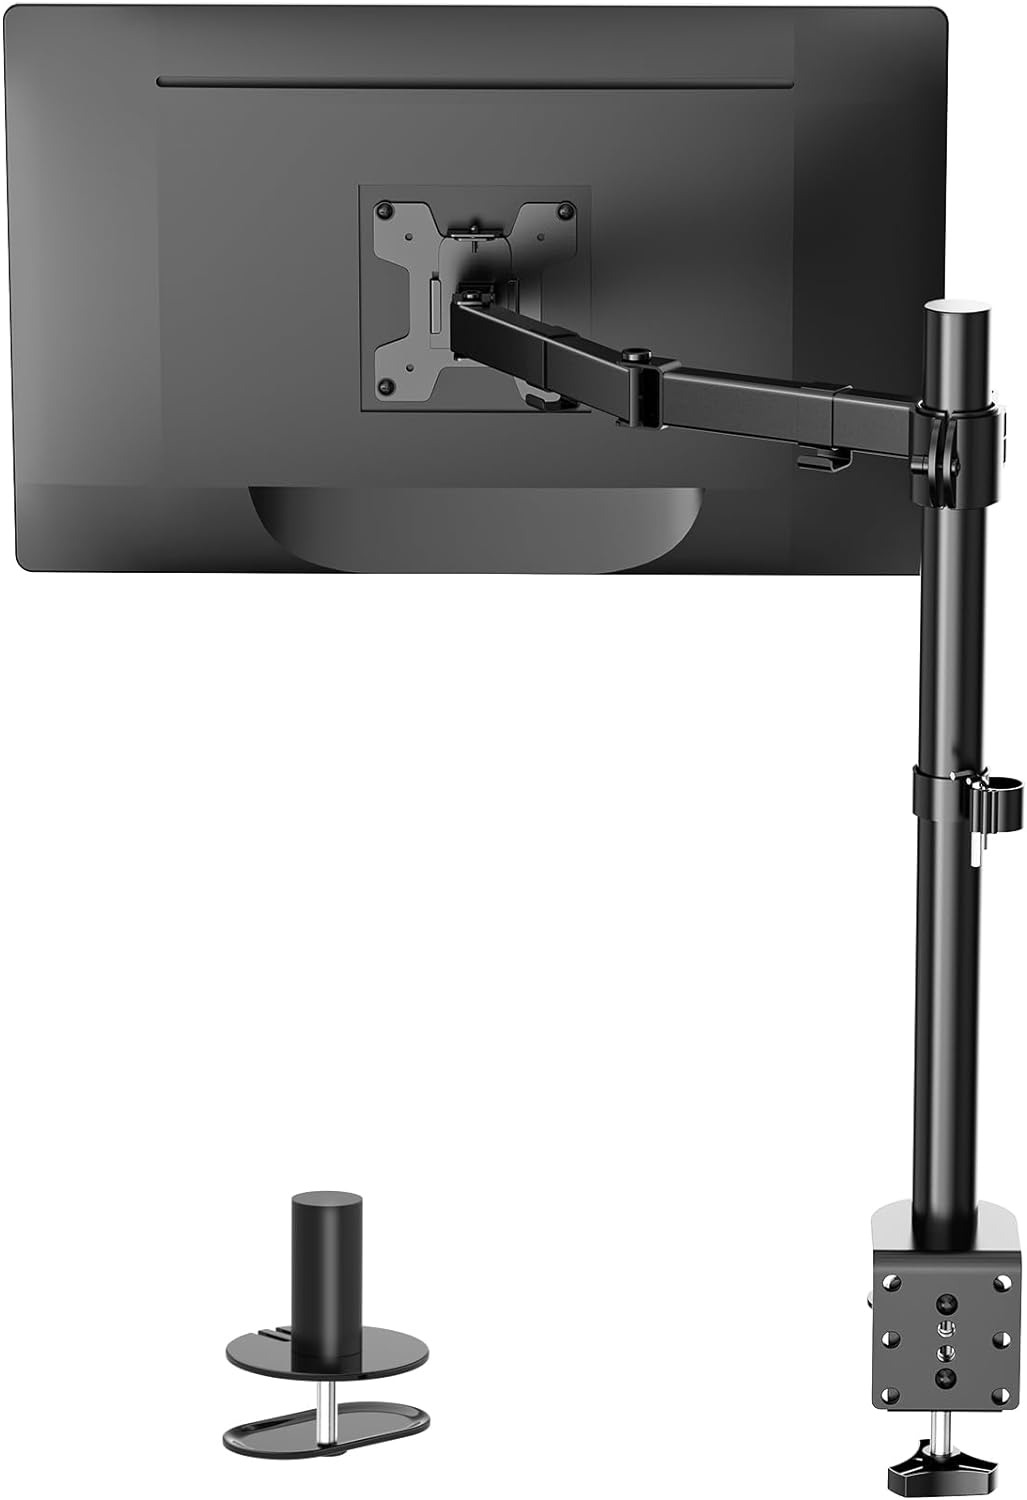 WALI Single Monitor Mount, Single Monitor Arm Desk Mount,Desk Monitor Stand, Up